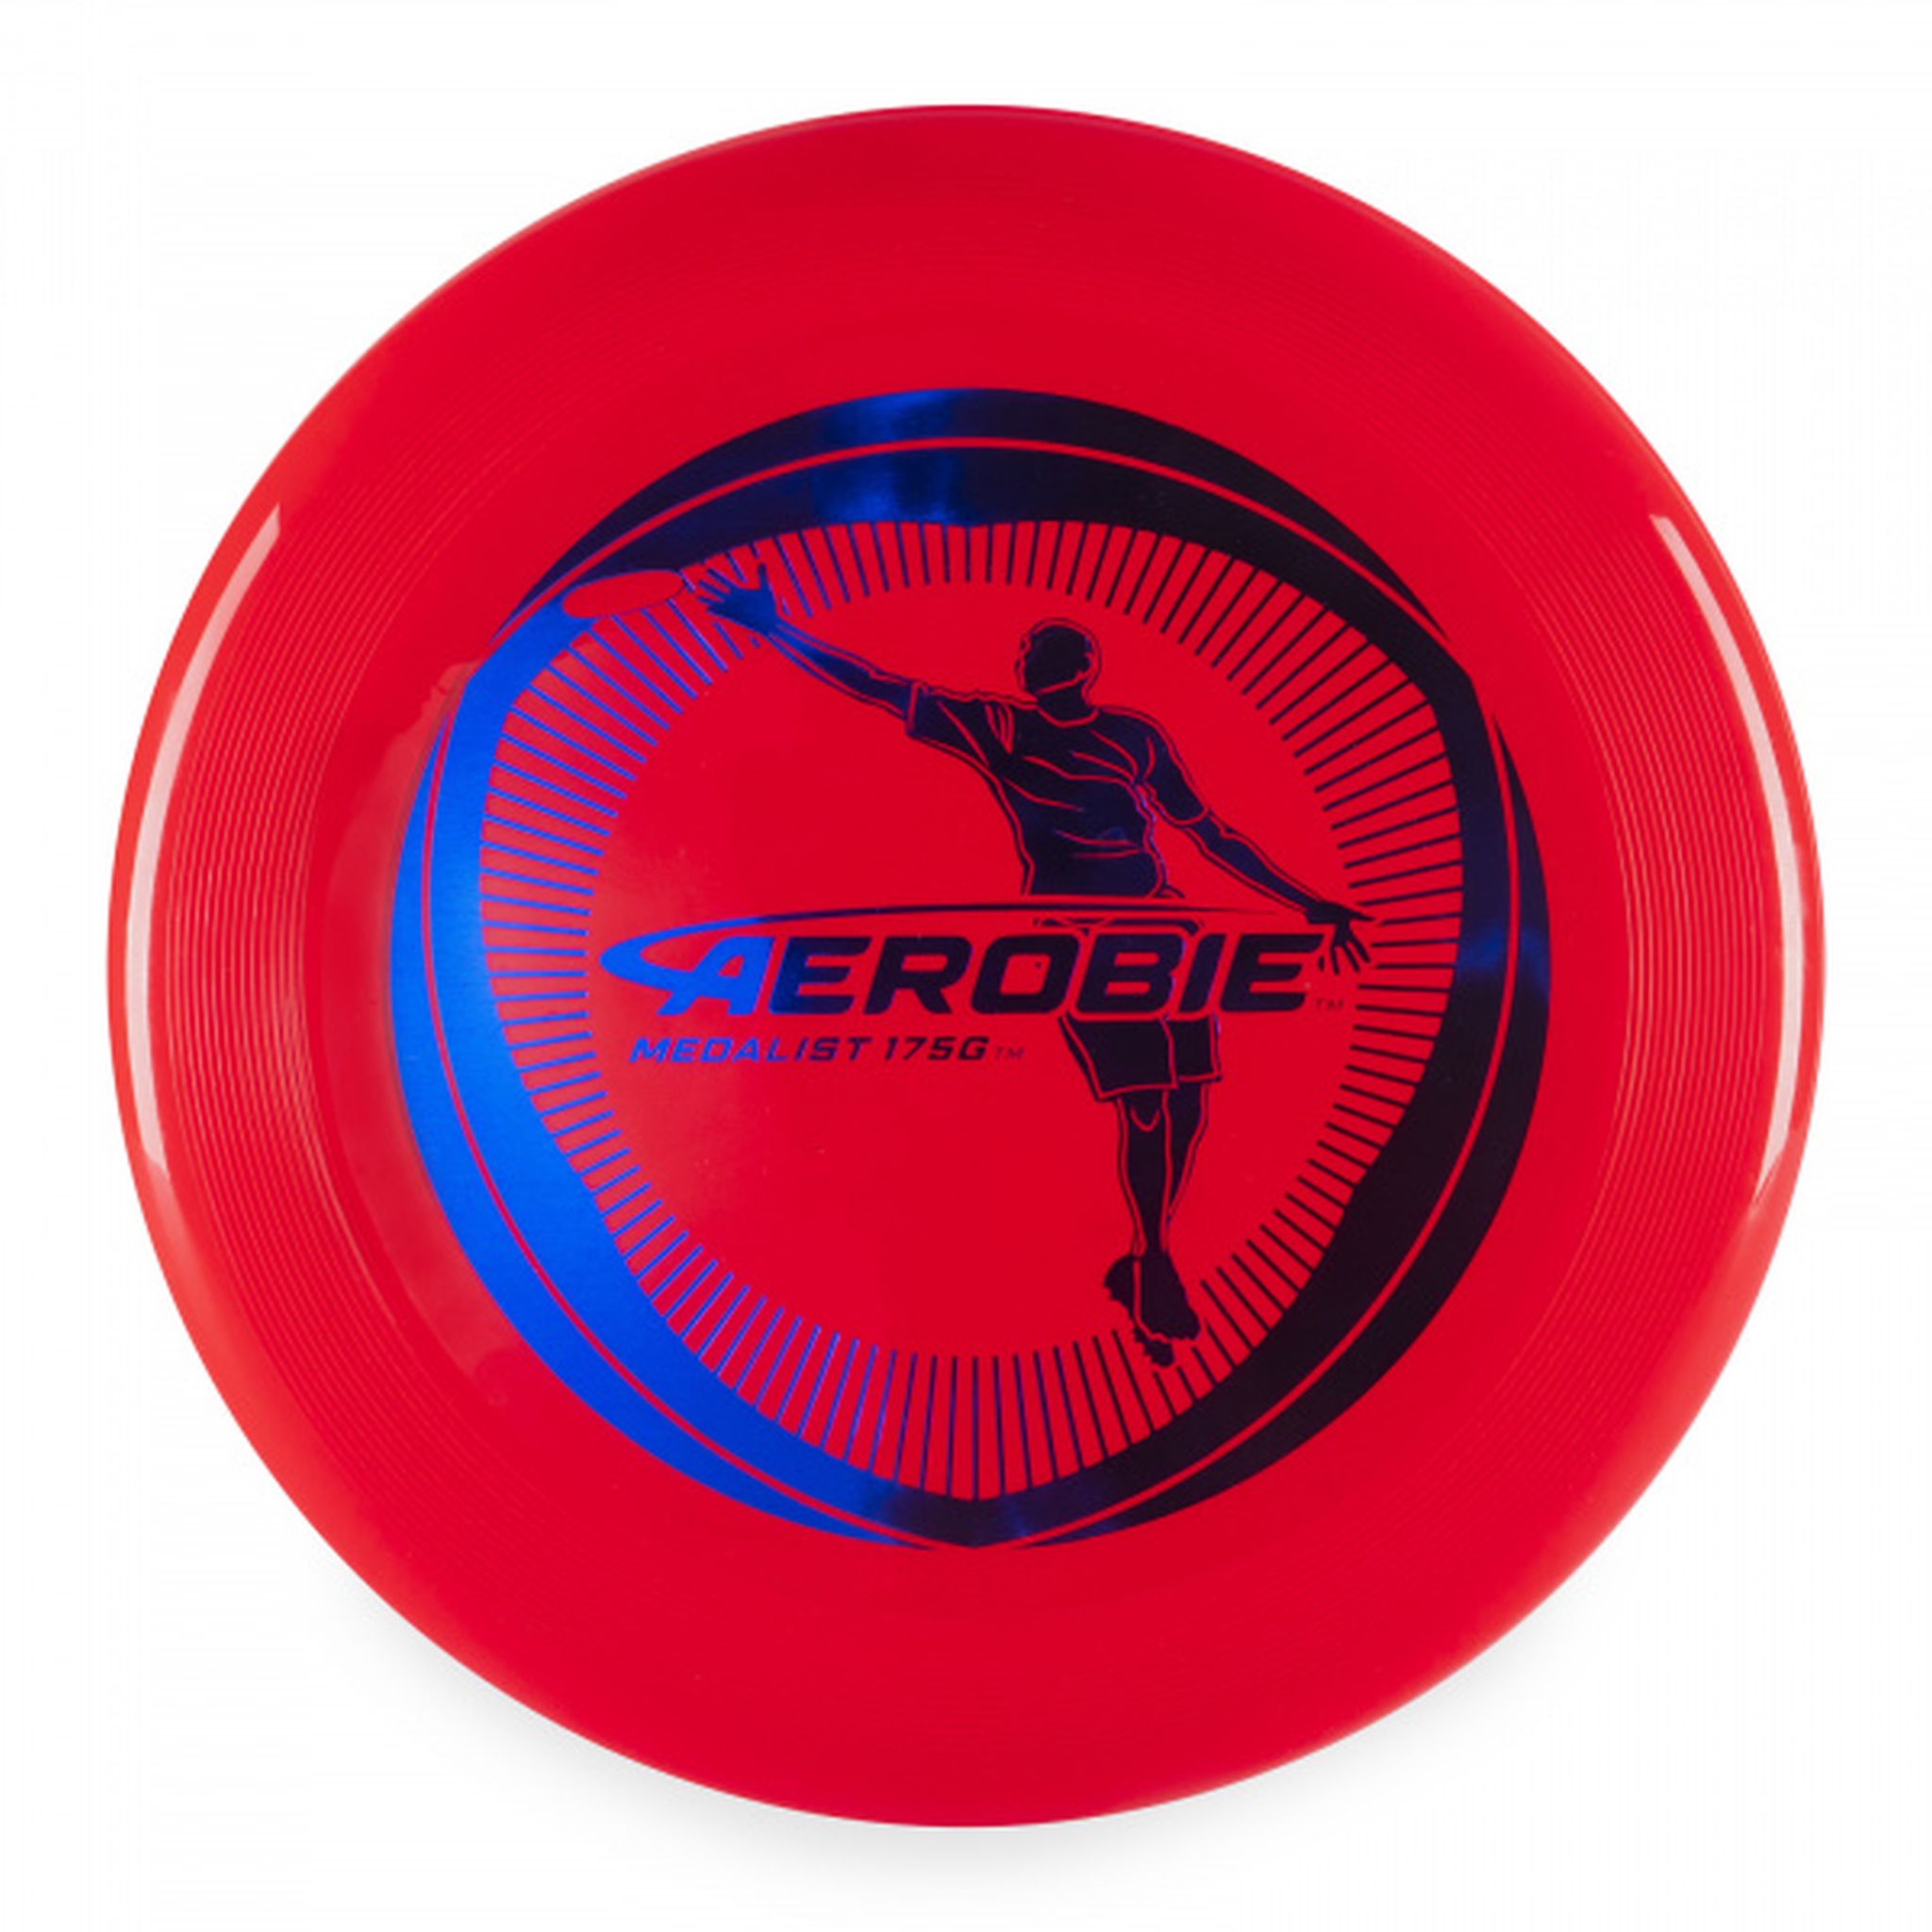 AEROBIE Medalist 175g Frisbee